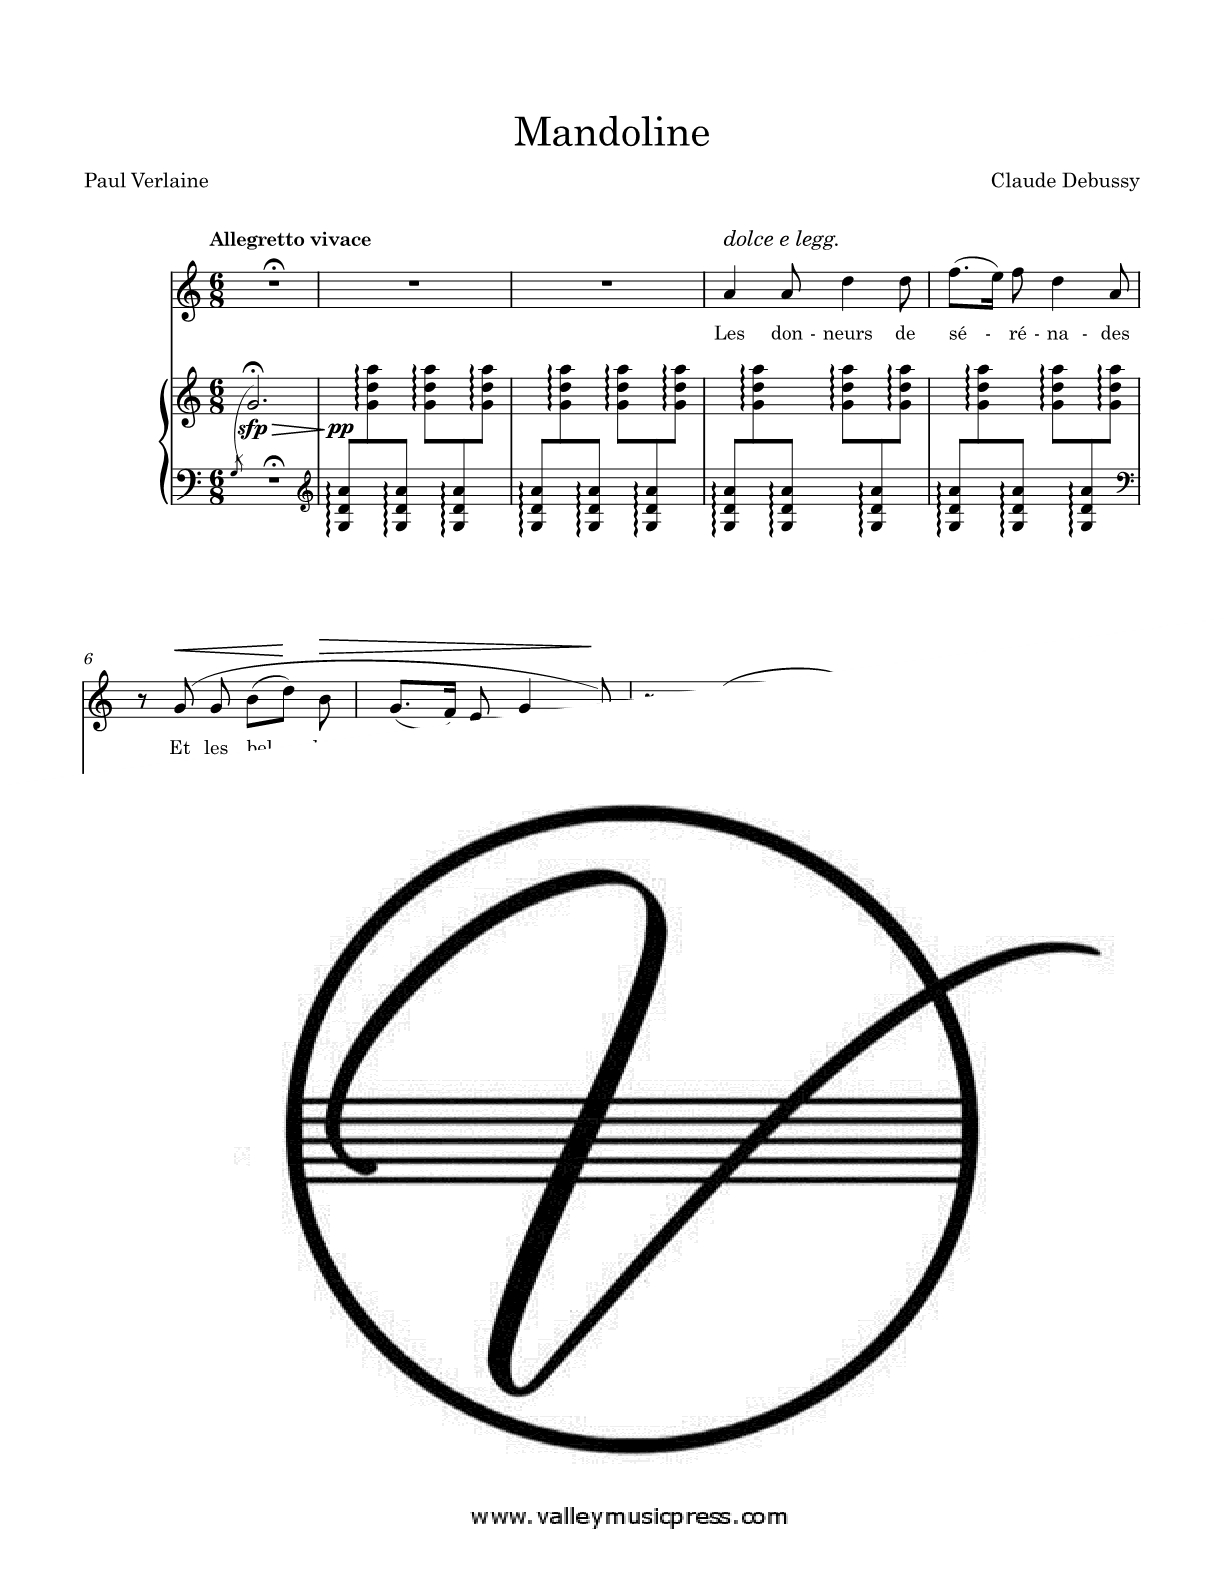 Debussy - Mandoline (Voice)